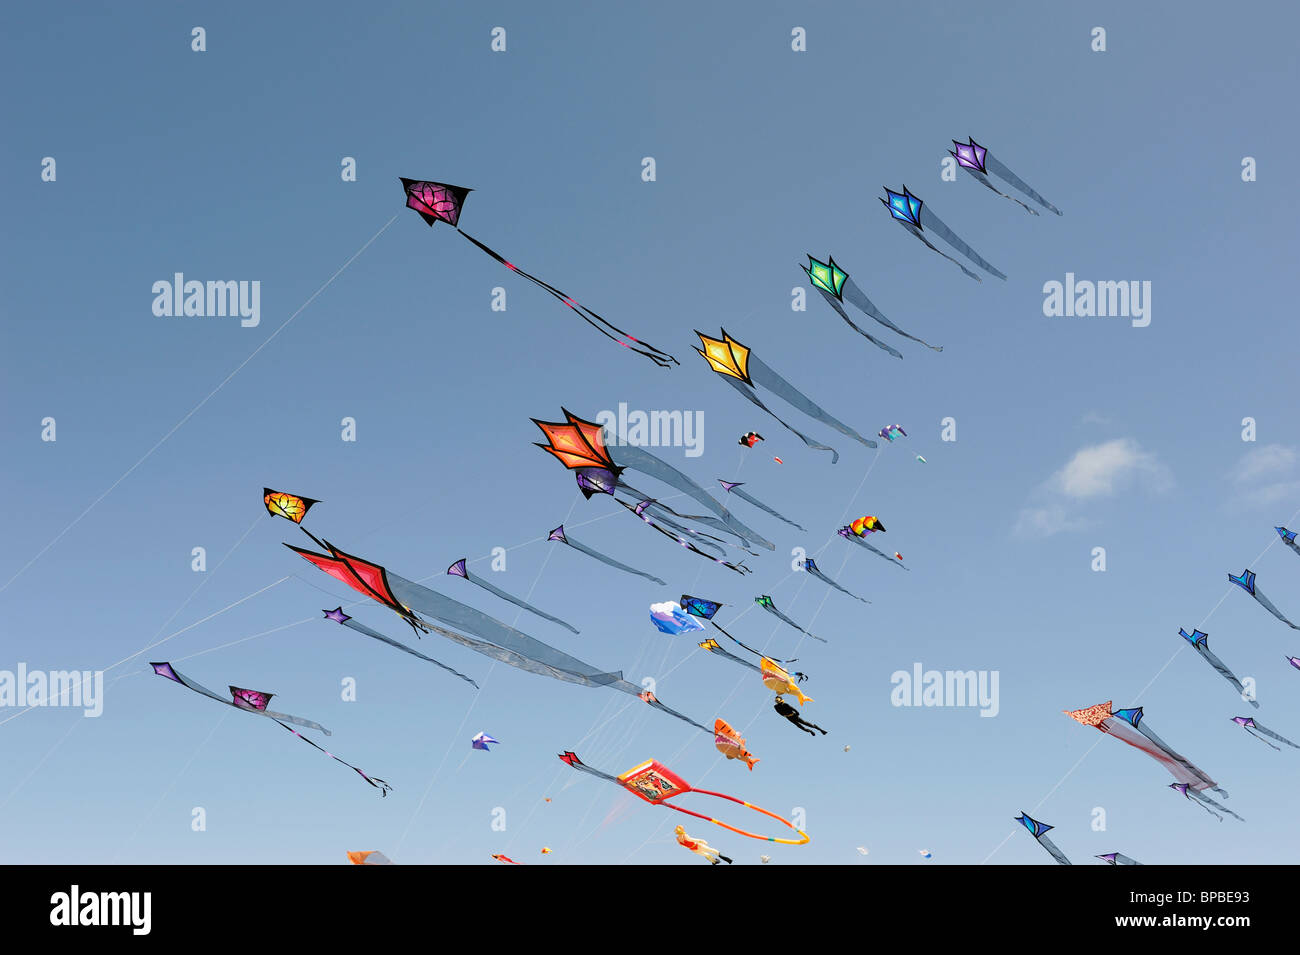 Sky full of kites Stock Photo